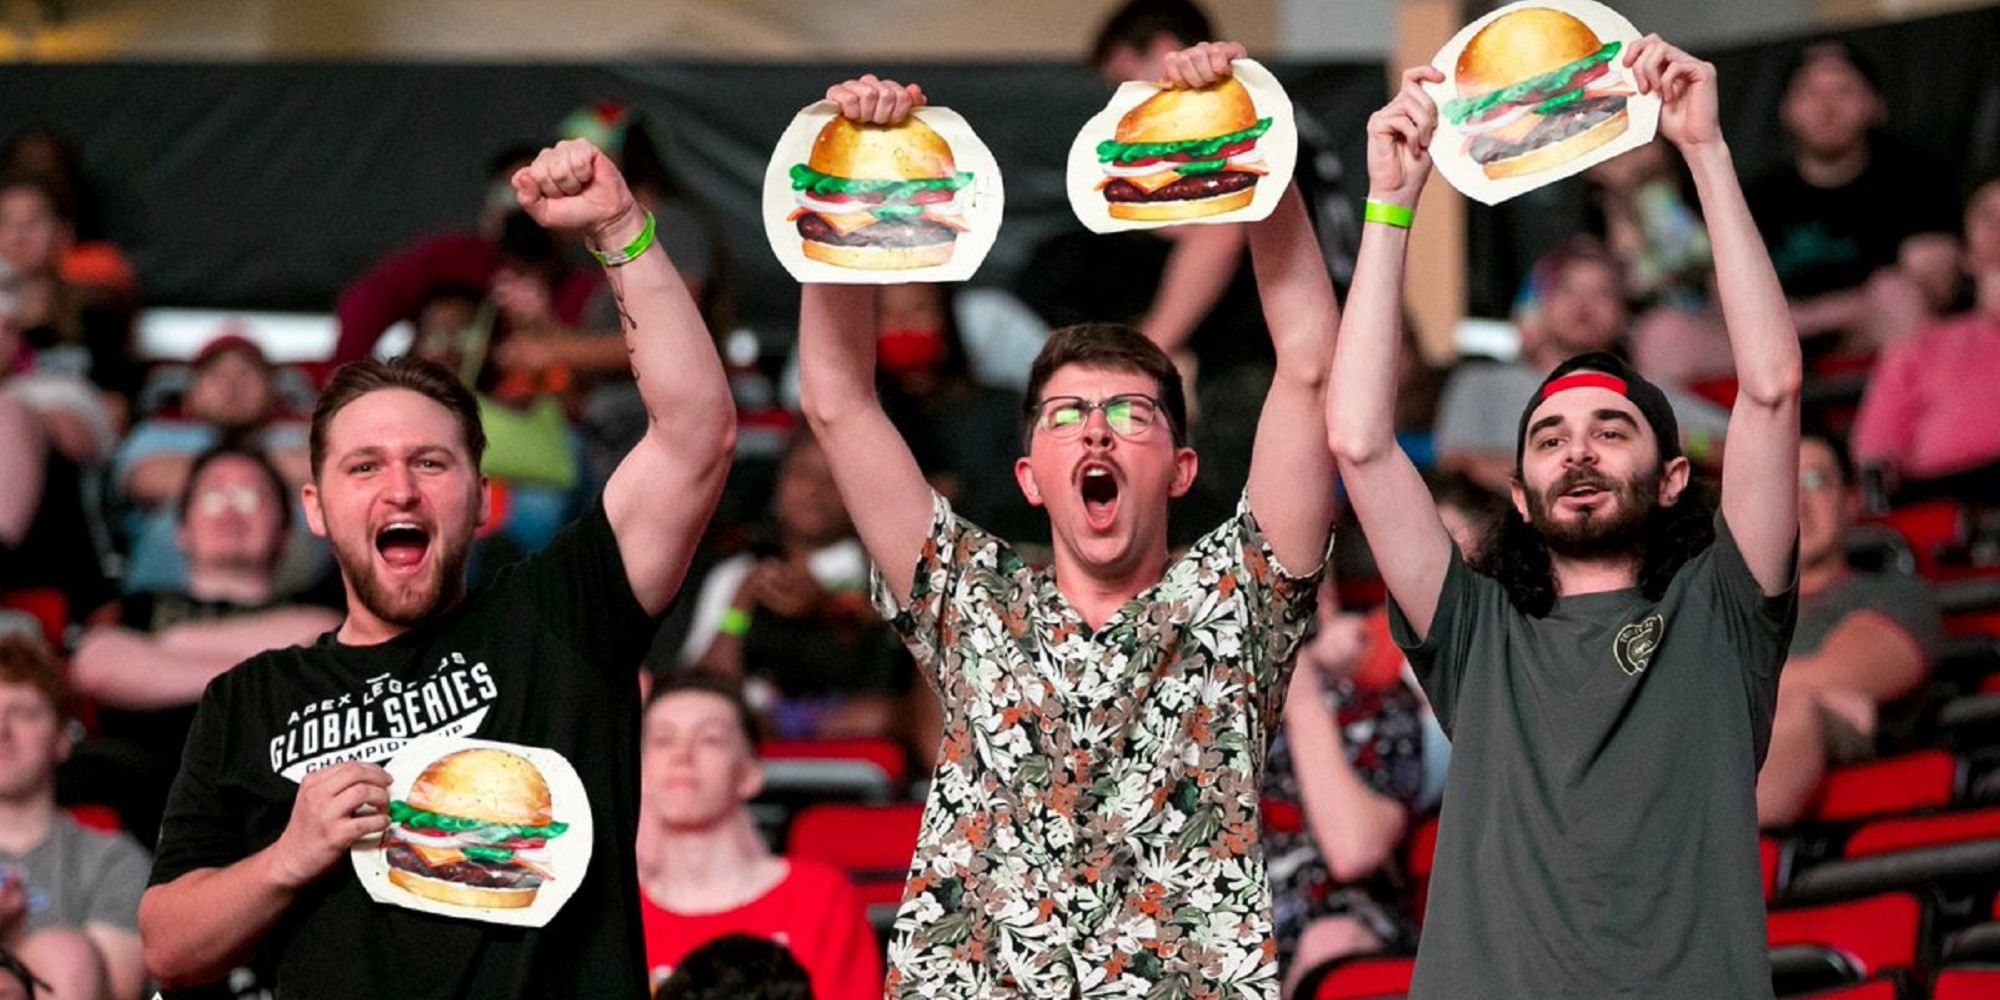 Inside The Burger Brigade Apex Legends Esports Rowdiest Fanbase